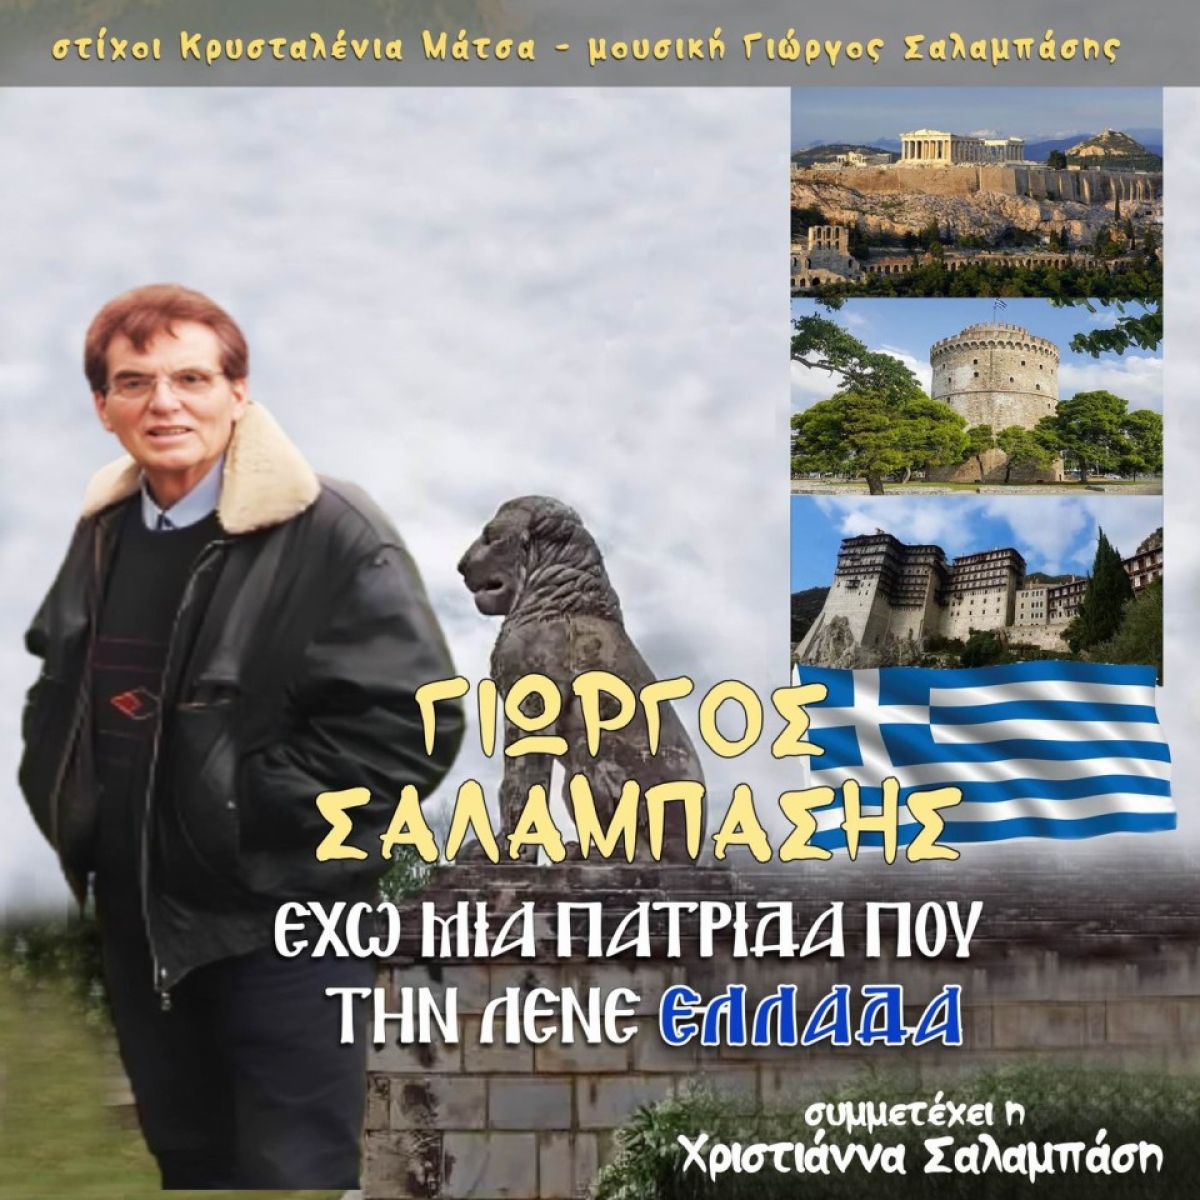 Music Liberty - Γιώργος Σαλαμπάσης - «Εχω μια πατρίδα που την λένε Ελλάδα»